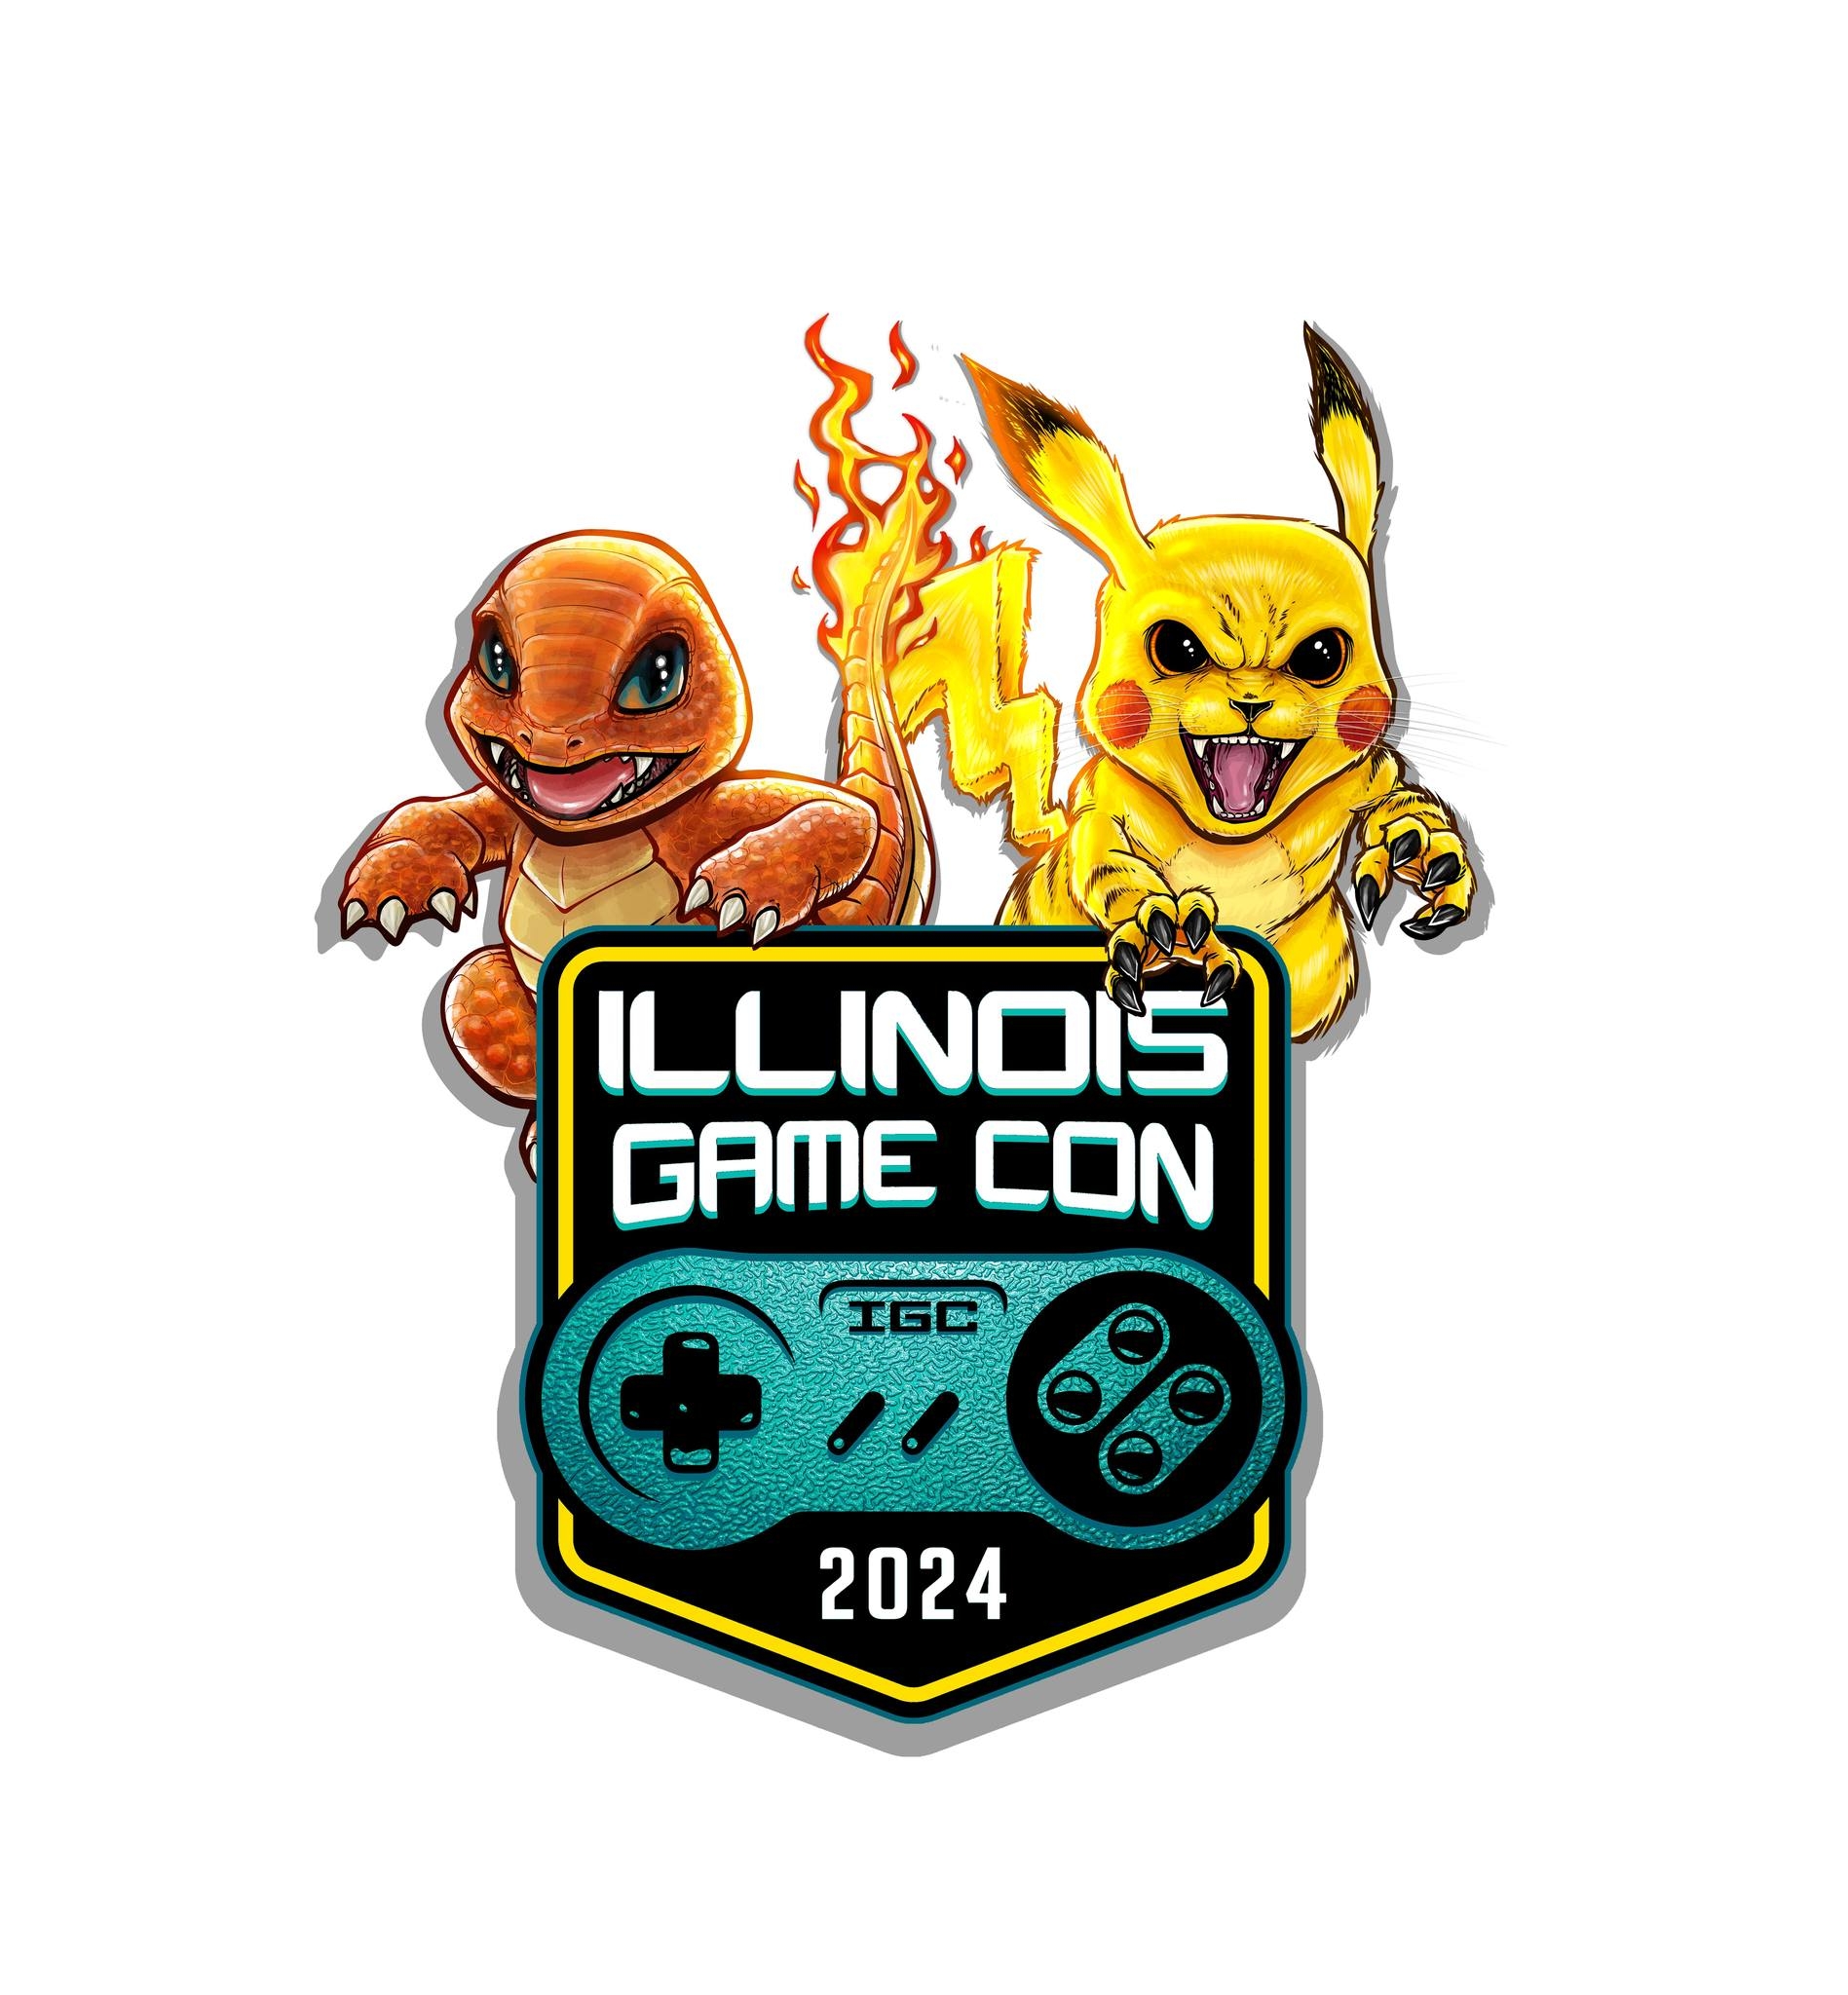 Illinois Game Con 2024